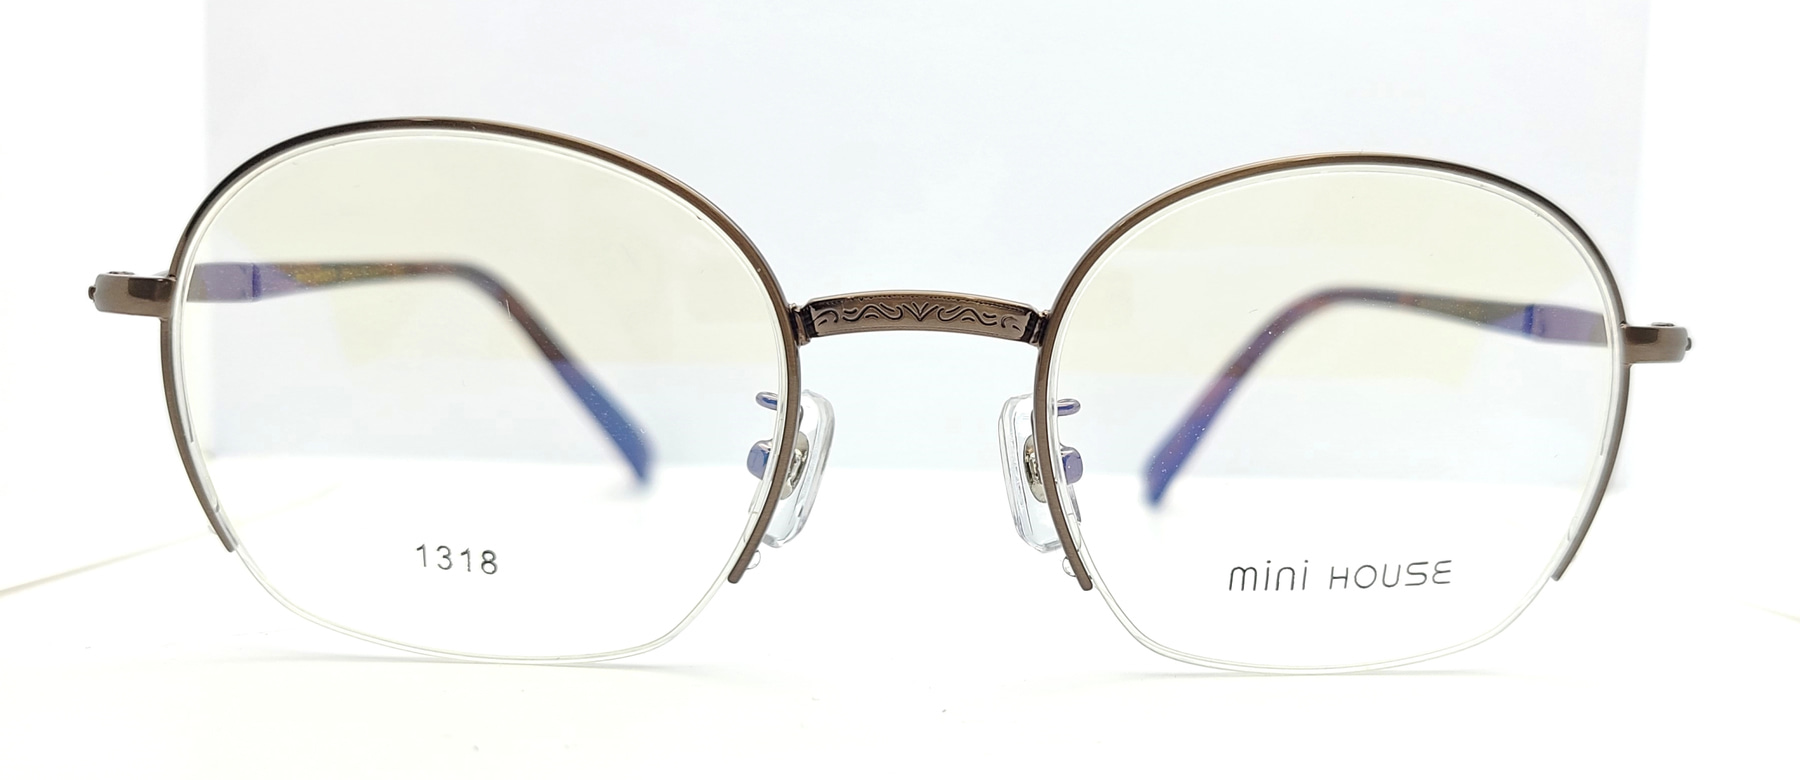 MINIHOUSE M-1318, Korean glasses, sunglasses, eyeglasses, glasses